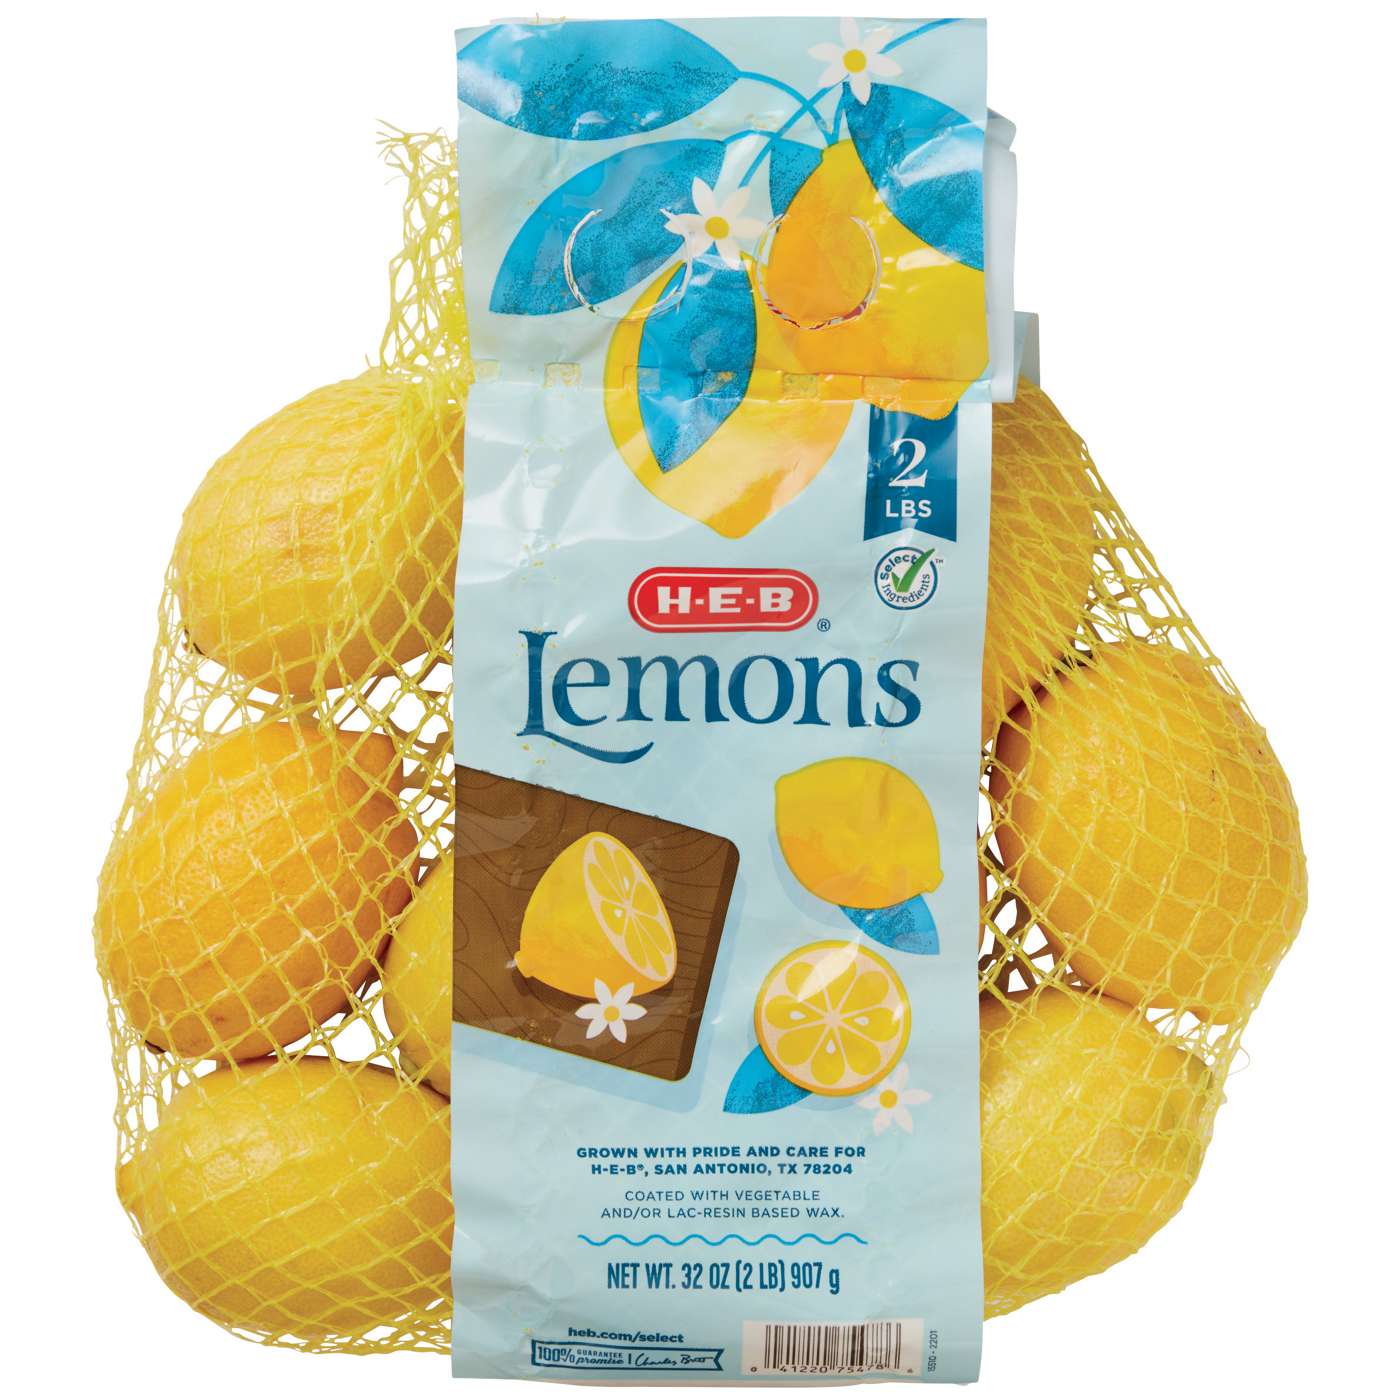 H-E-B Fresh Lemons; image 1 of 2